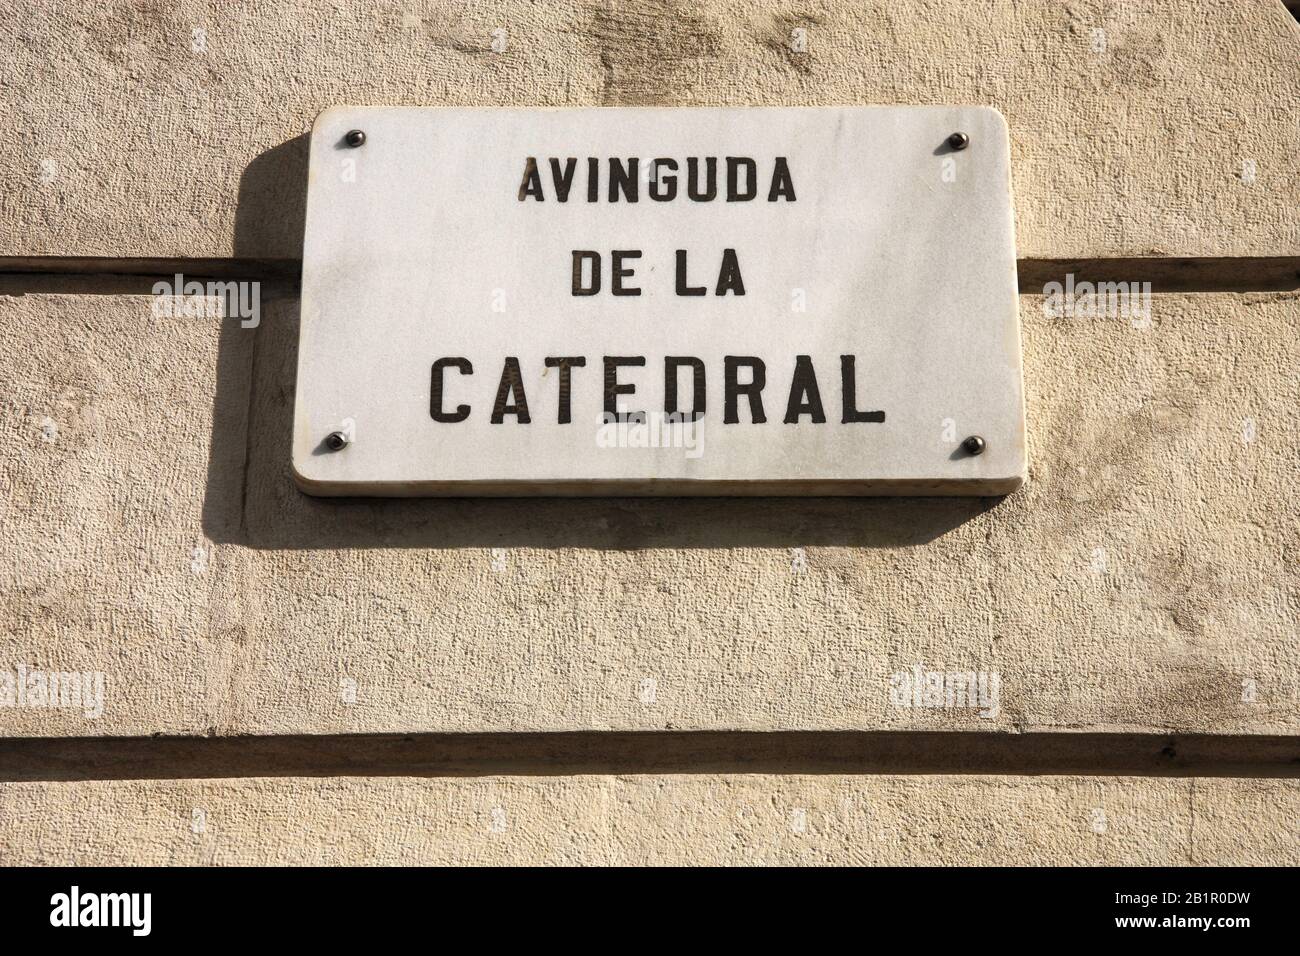 Avinguda de la Catedral - street sign in Barcelona, Spain. Barri Gotic district. Stock Photo